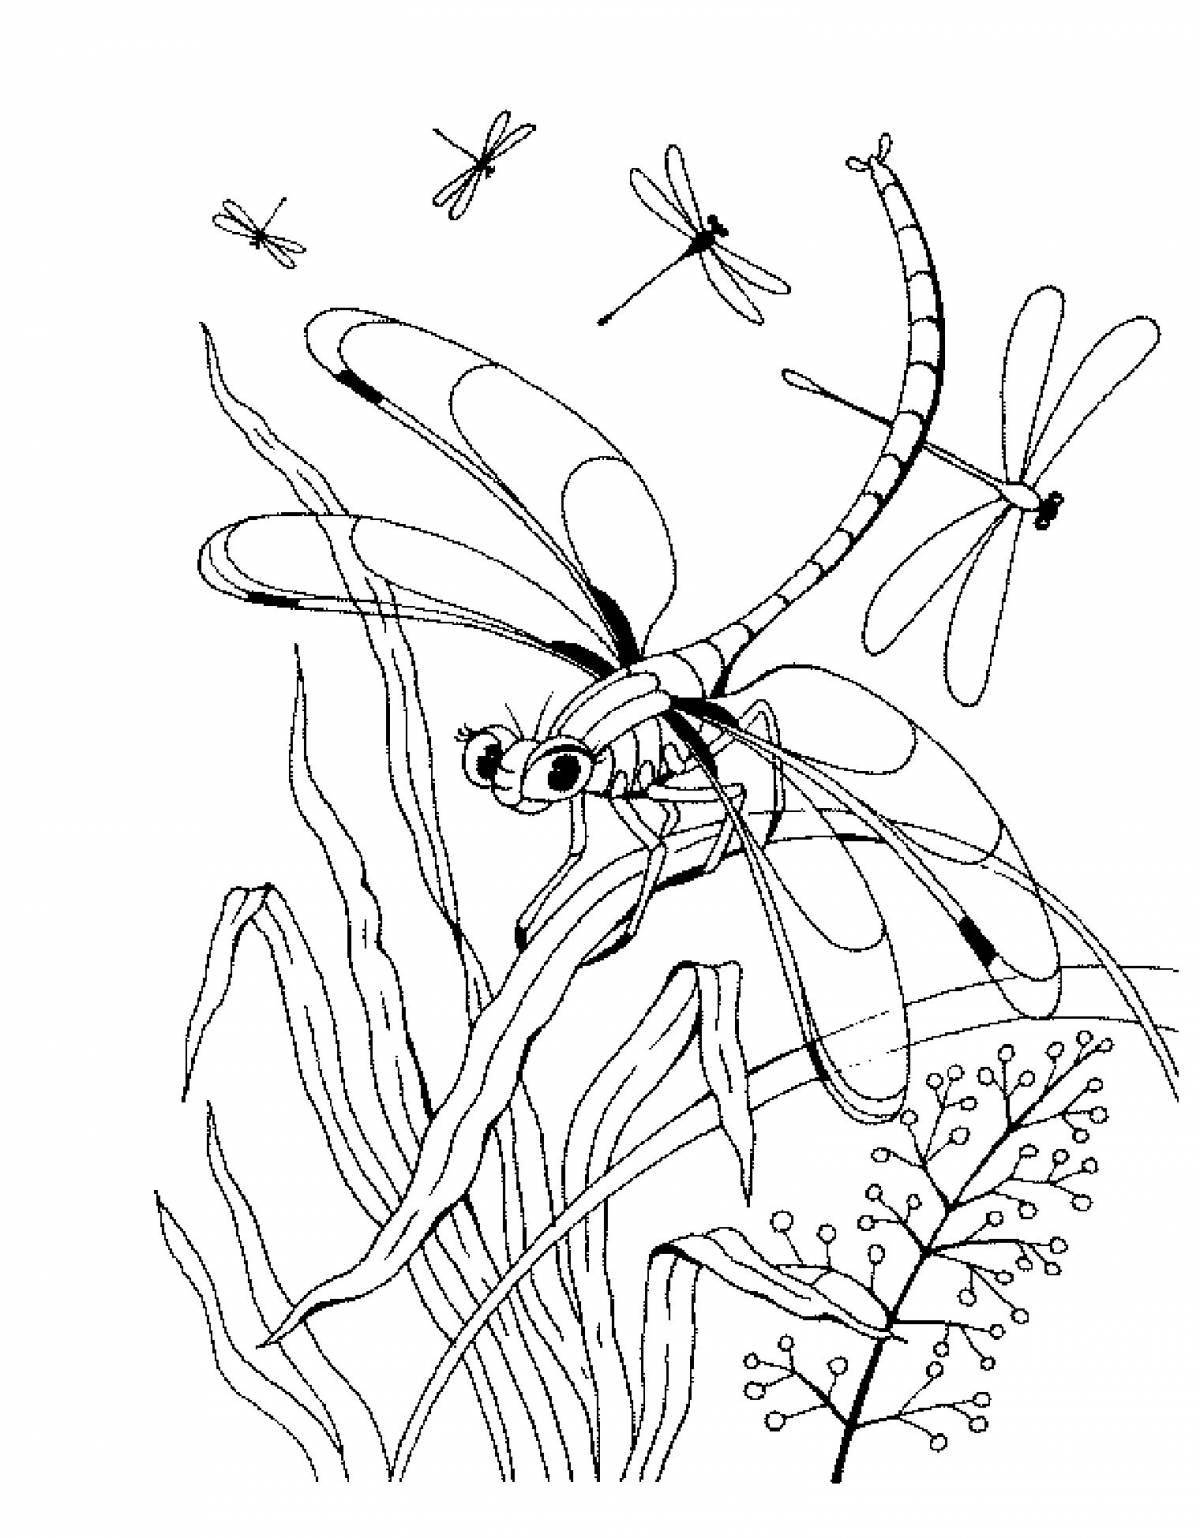 Dandelion beetle #7